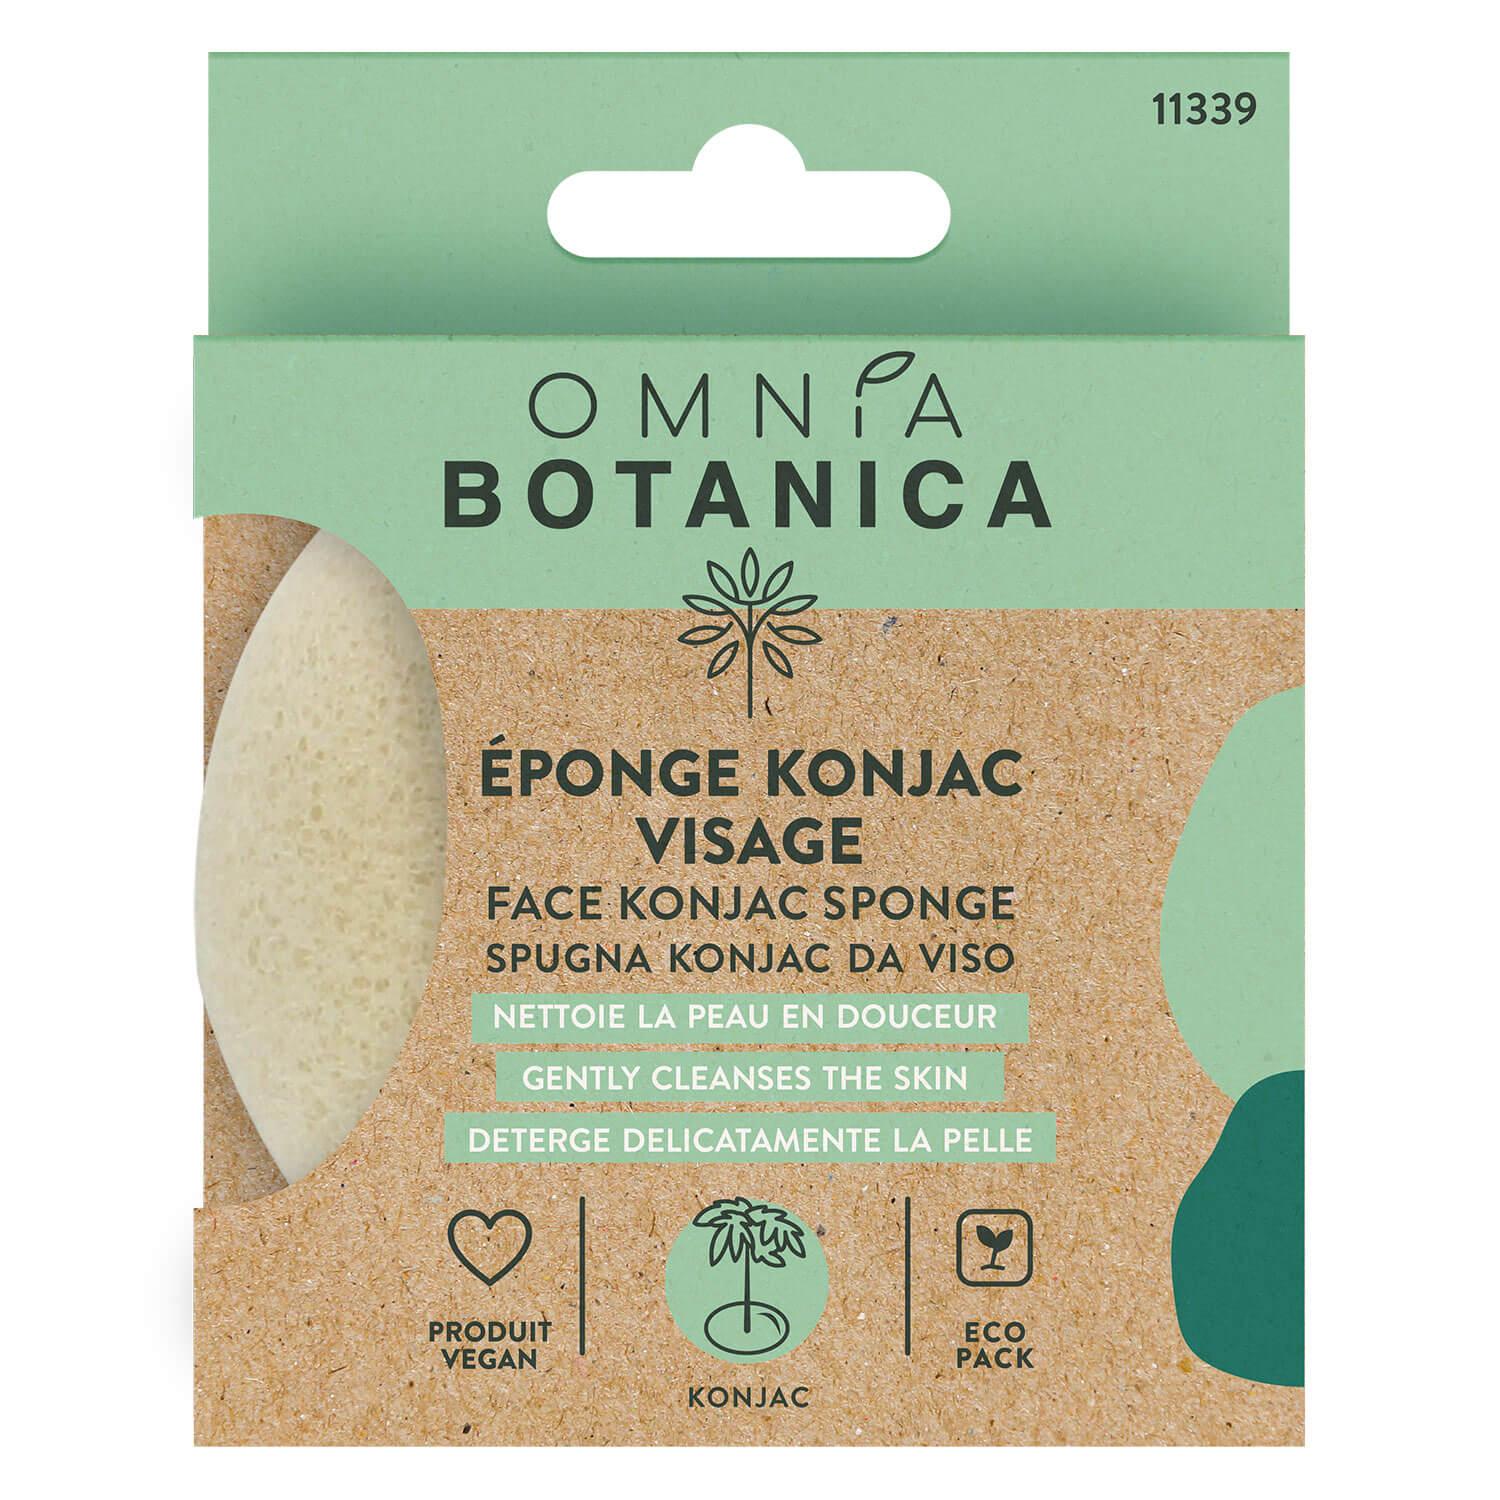 OMNIA BOTANICA - Face Konjac Sponge